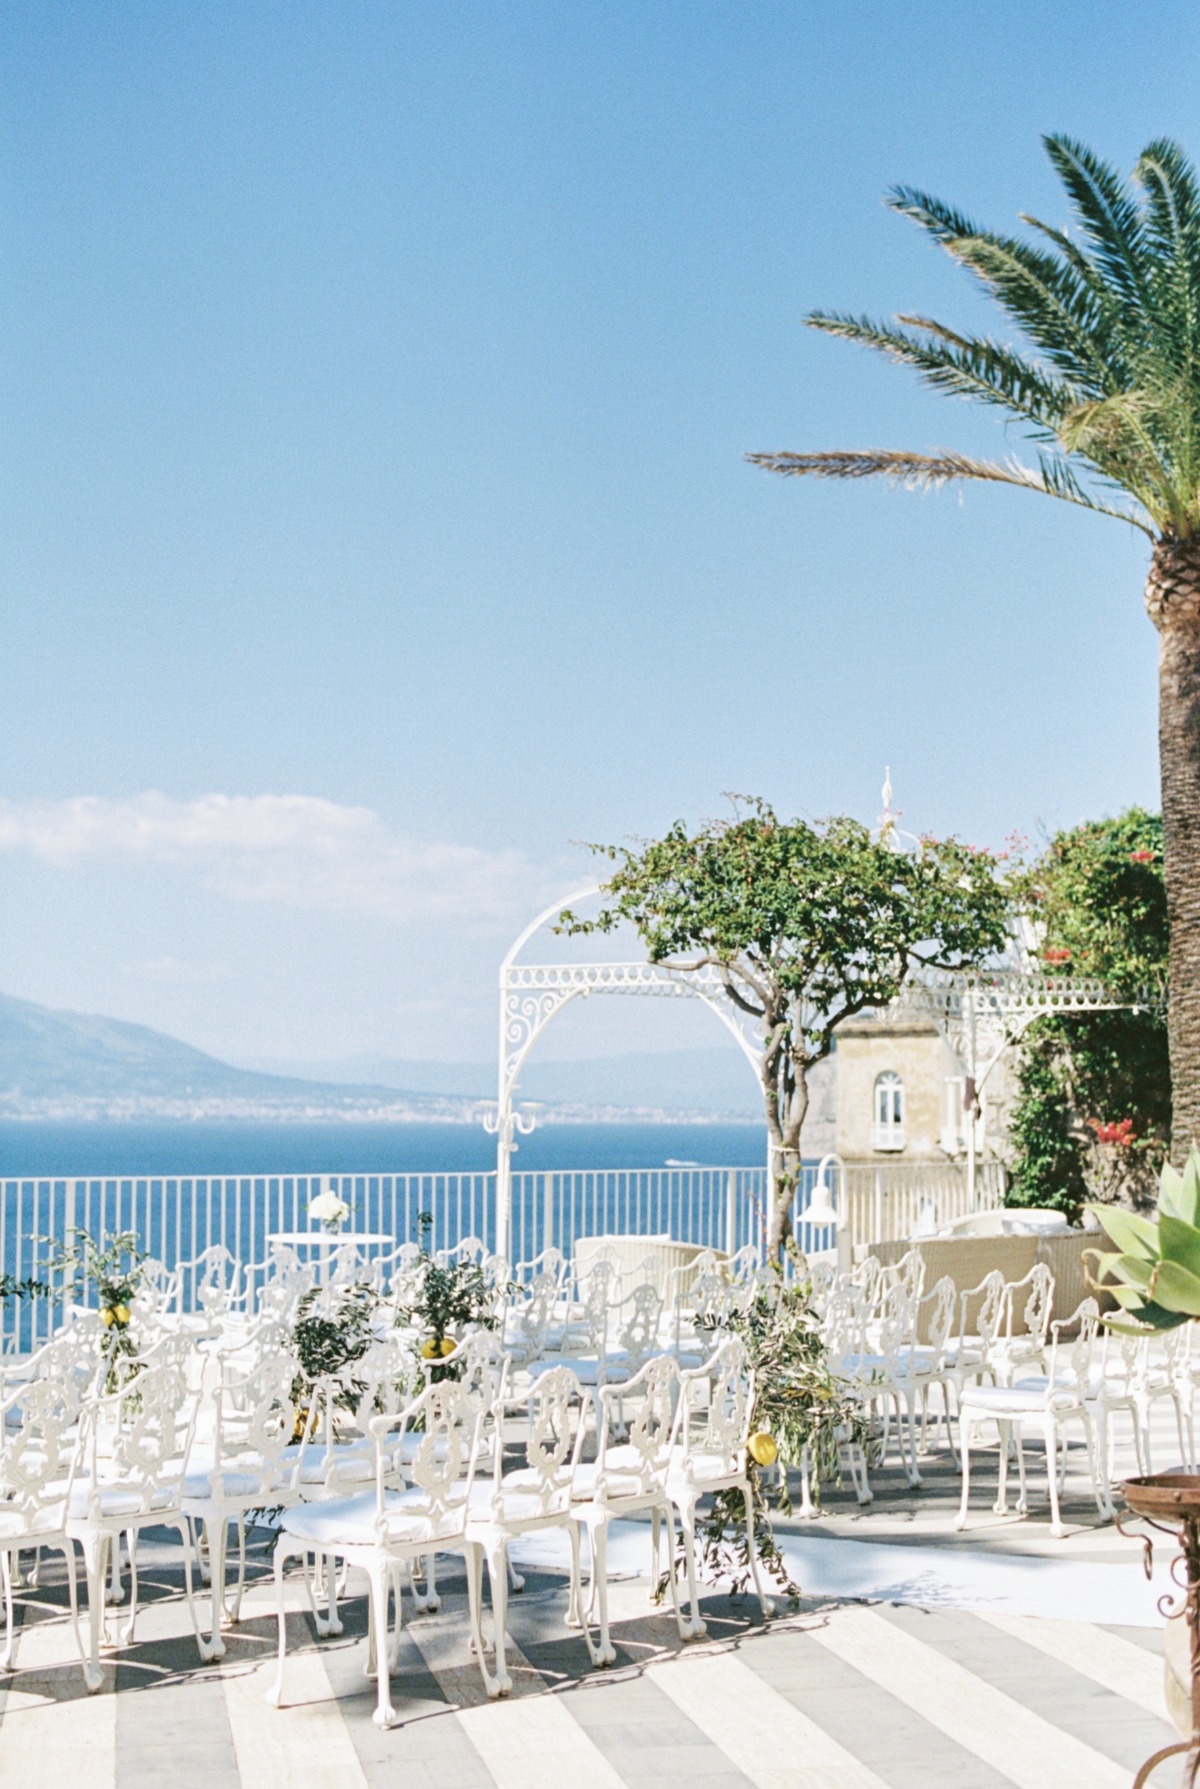 Ocean view wedding ceremony in Italy